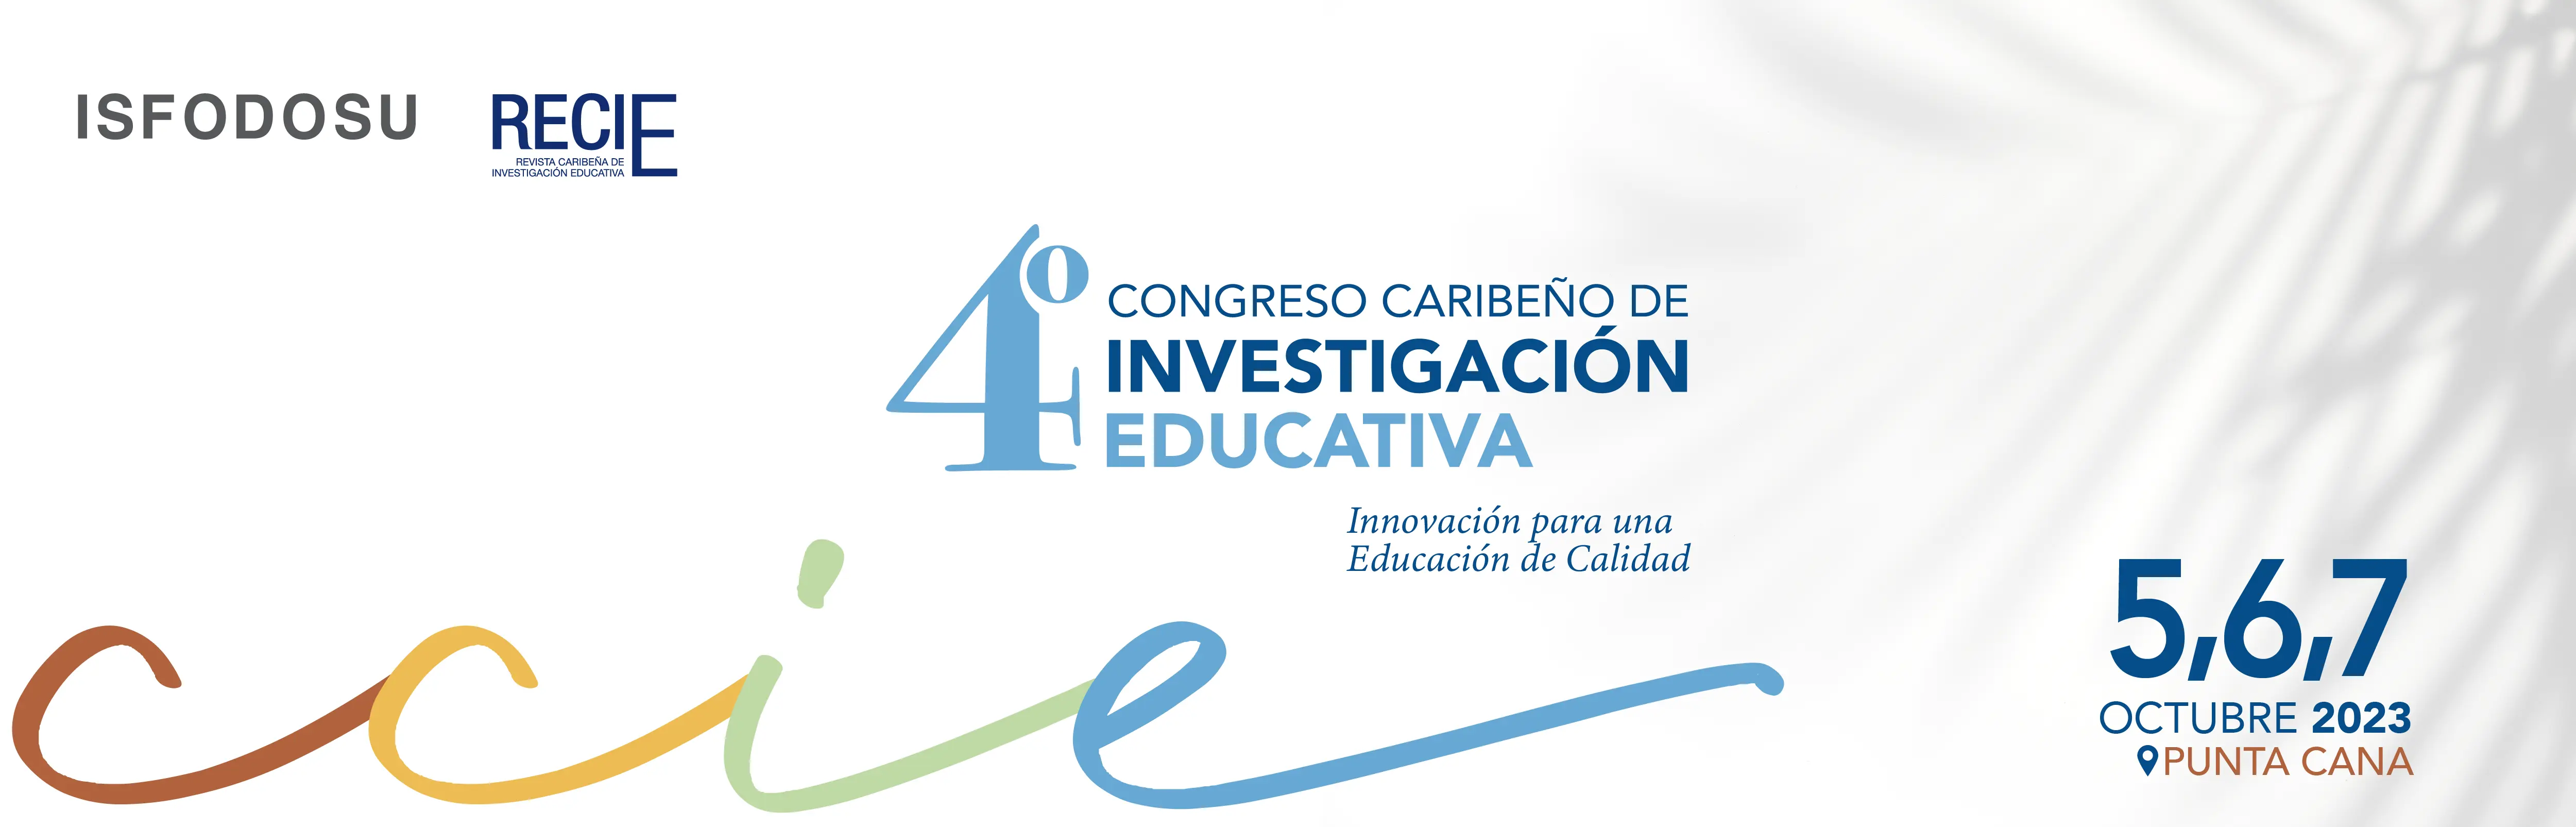 Banner Congreso Caribeño de Investigación Educativa